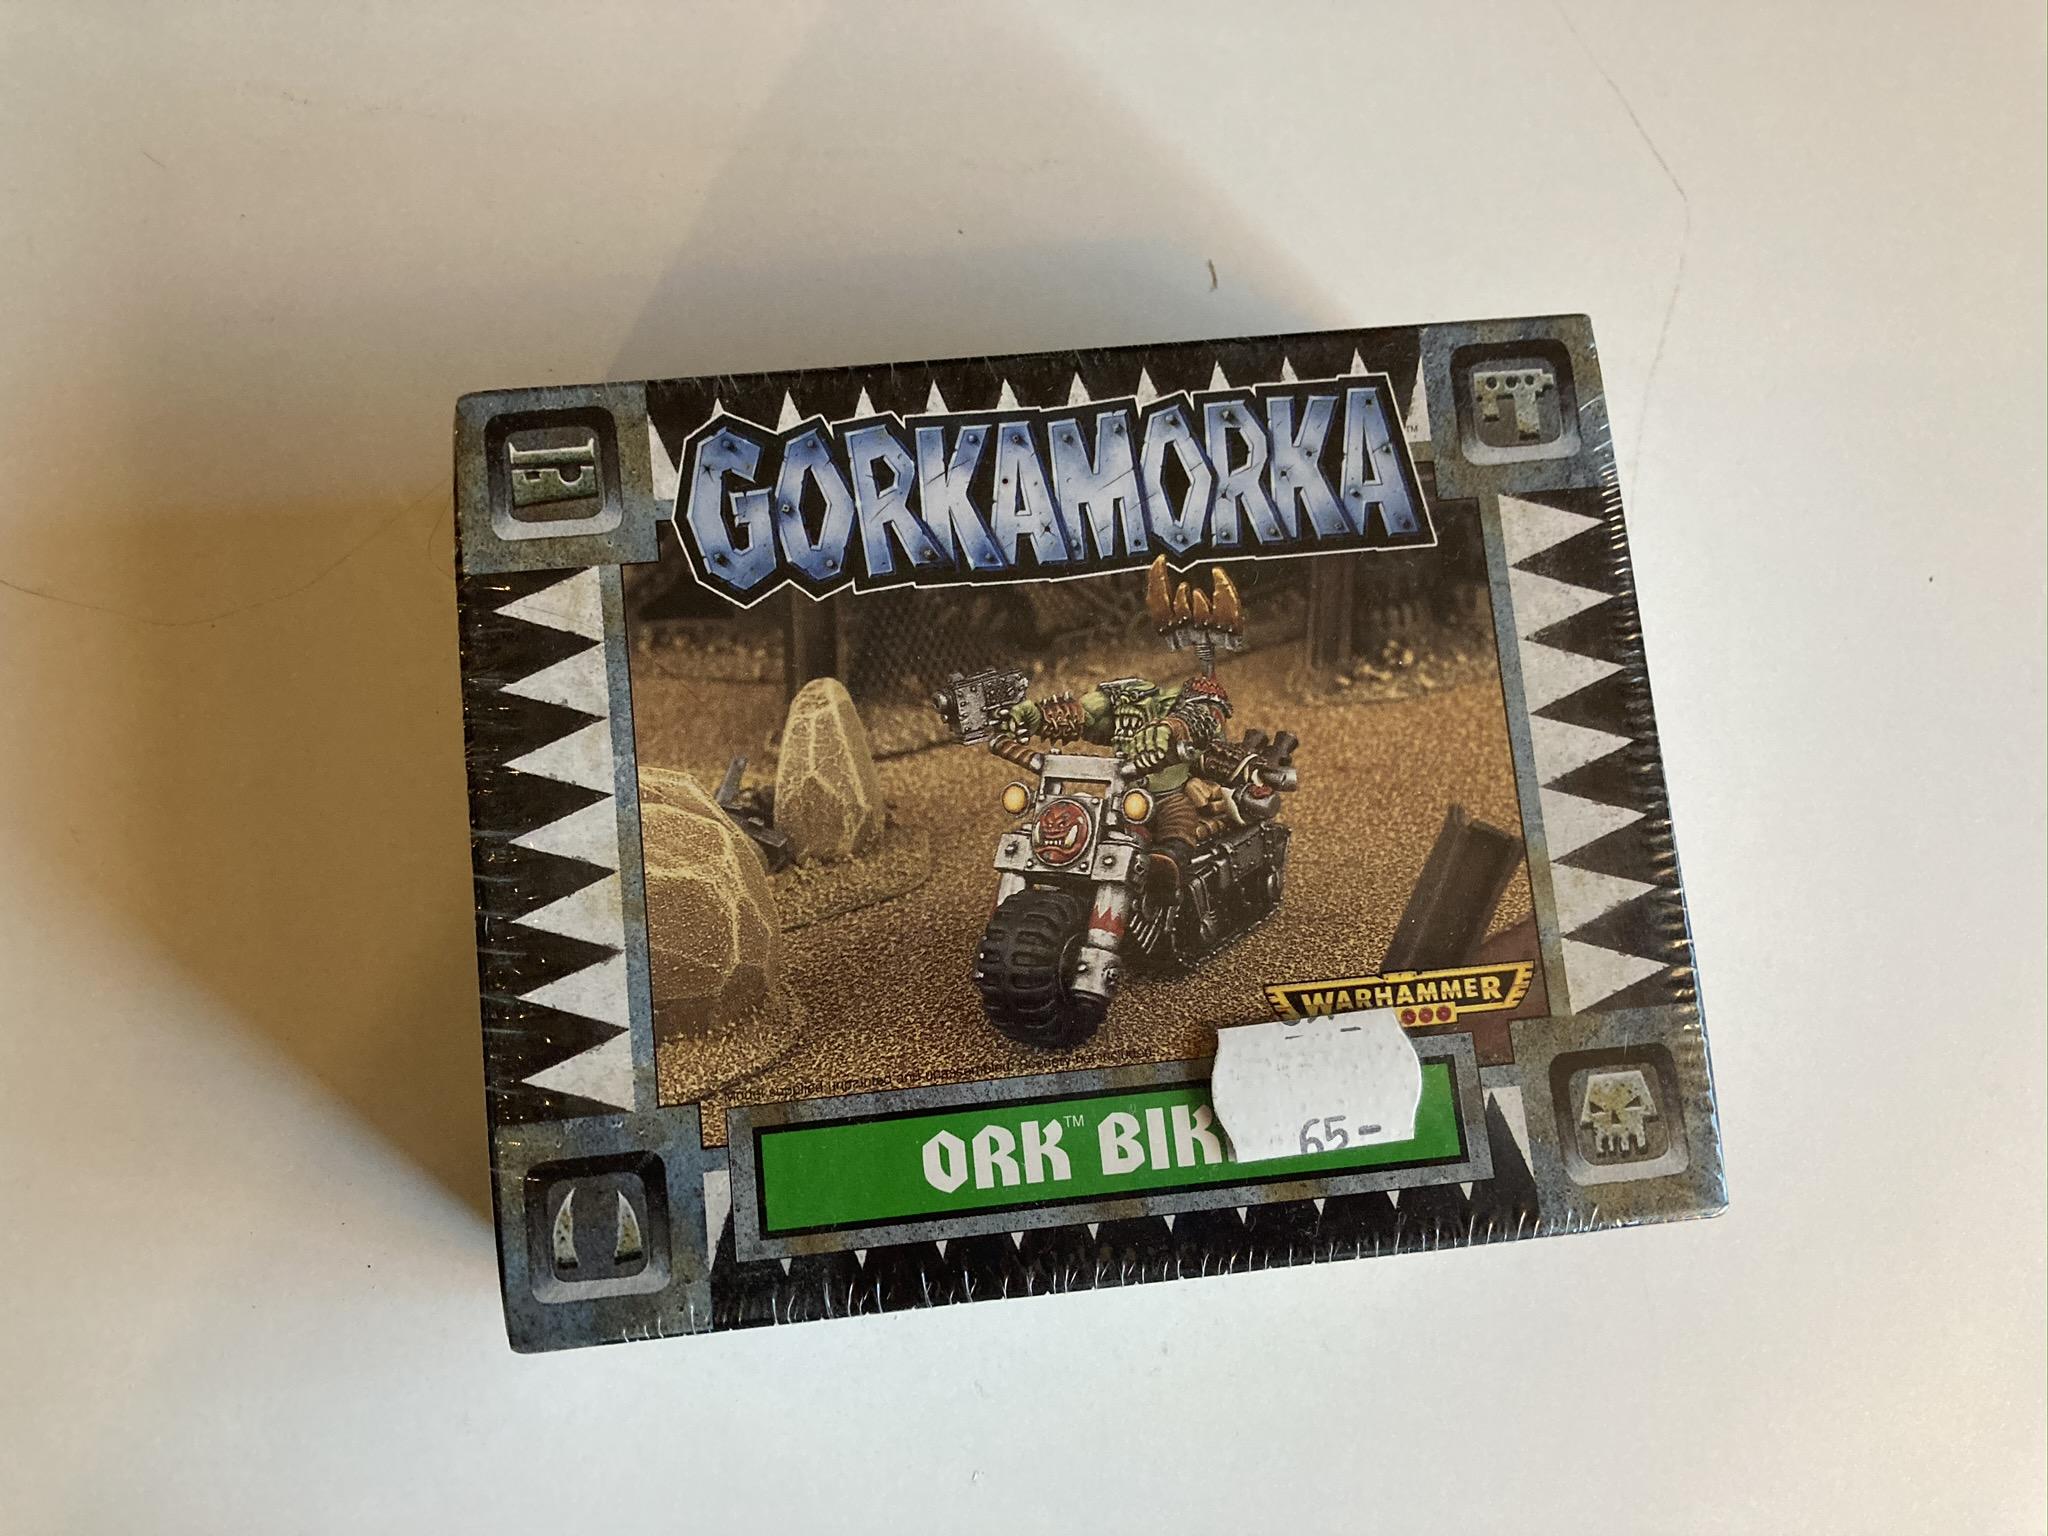 Ork Bike from GorkaMorka